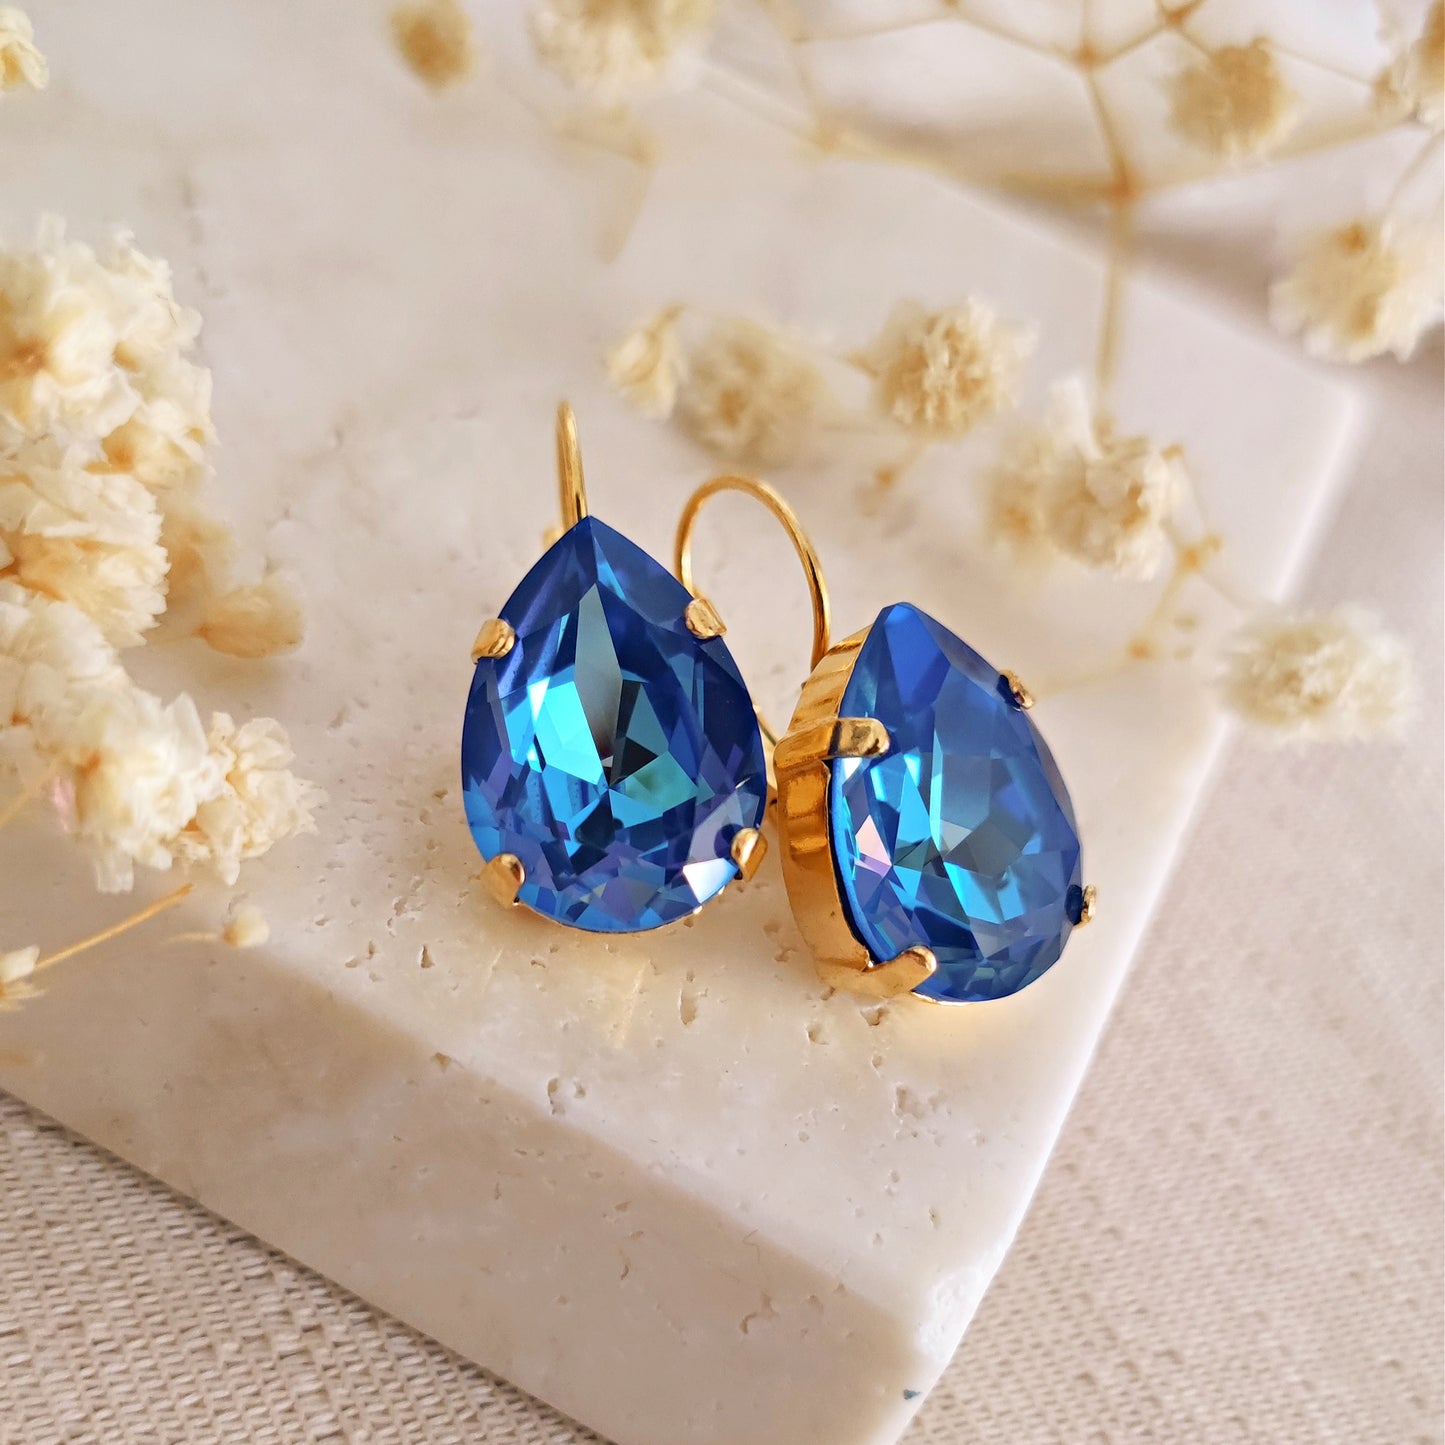 Crystal Royal Blue and Crystal Powder Grey Bridal Earrings